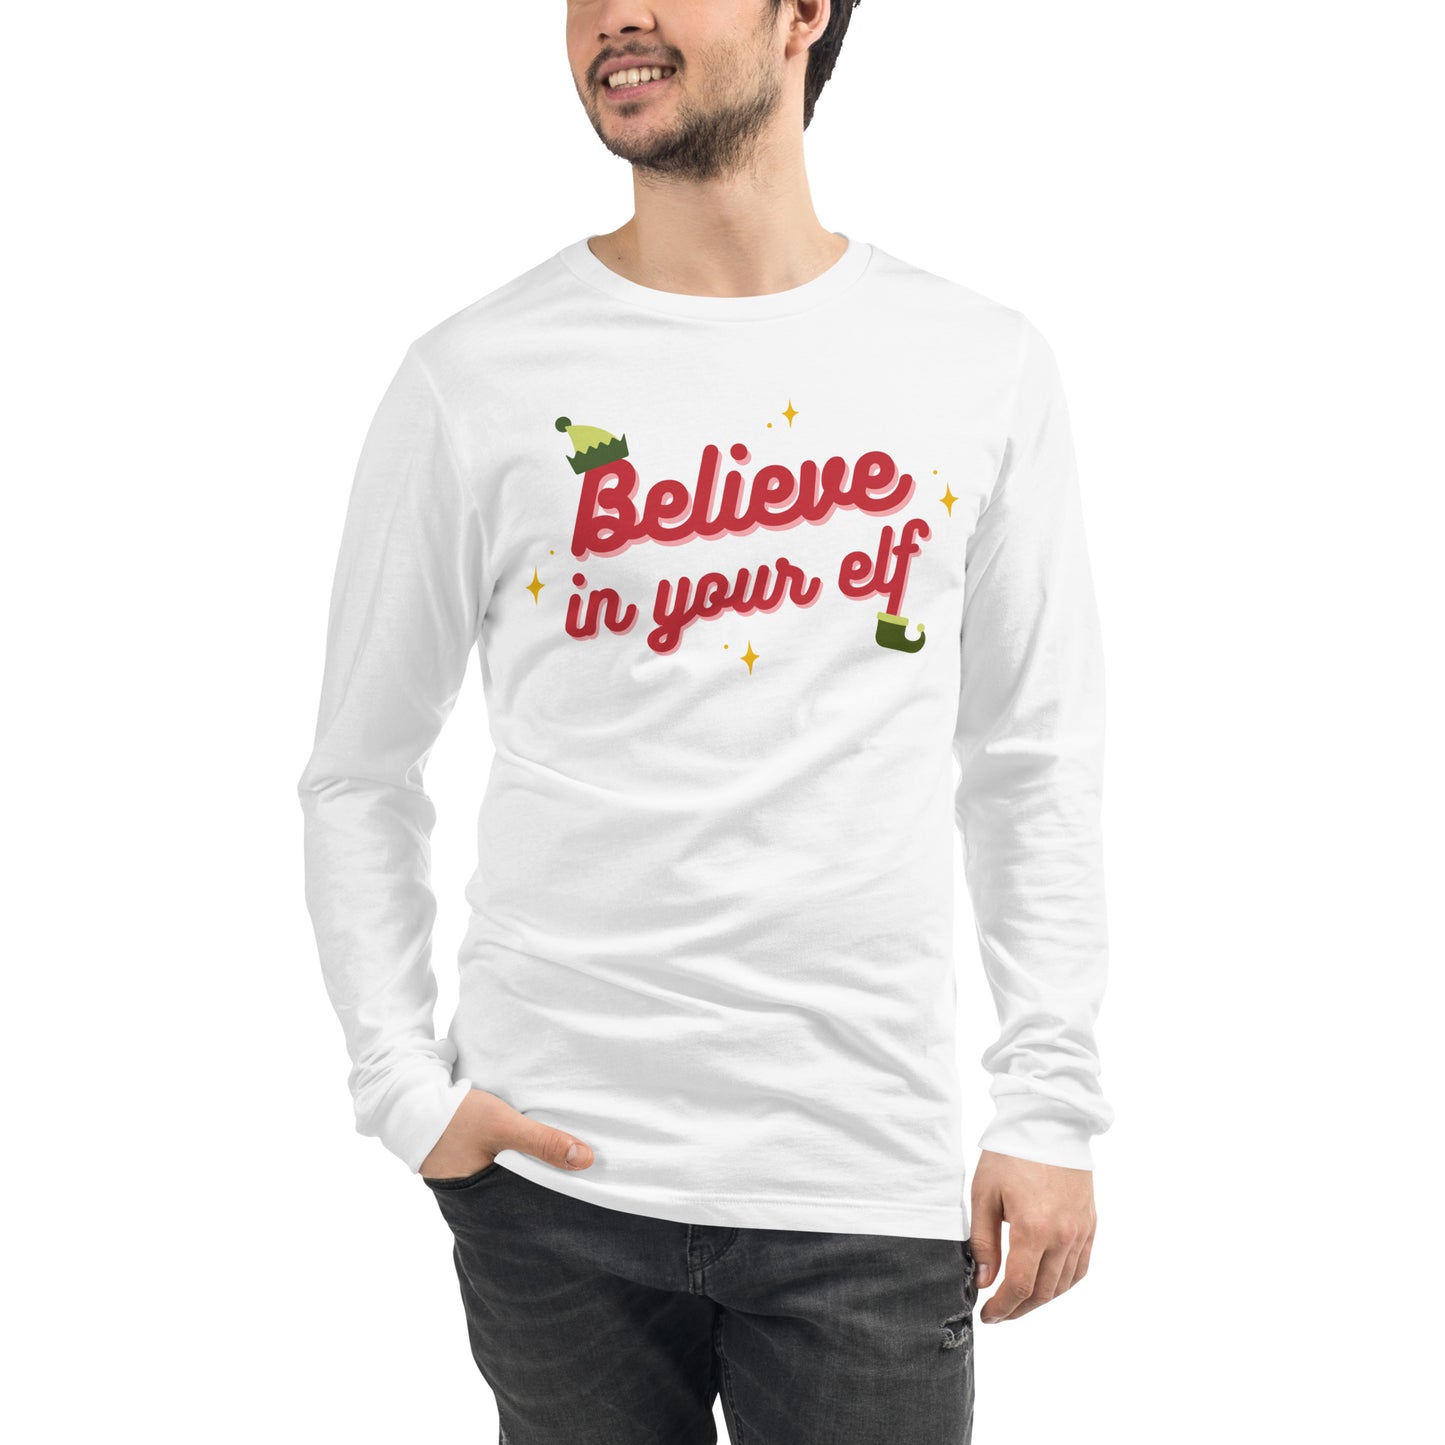 Believe in your Elf — Adult Unisex Long Sleeve Tee